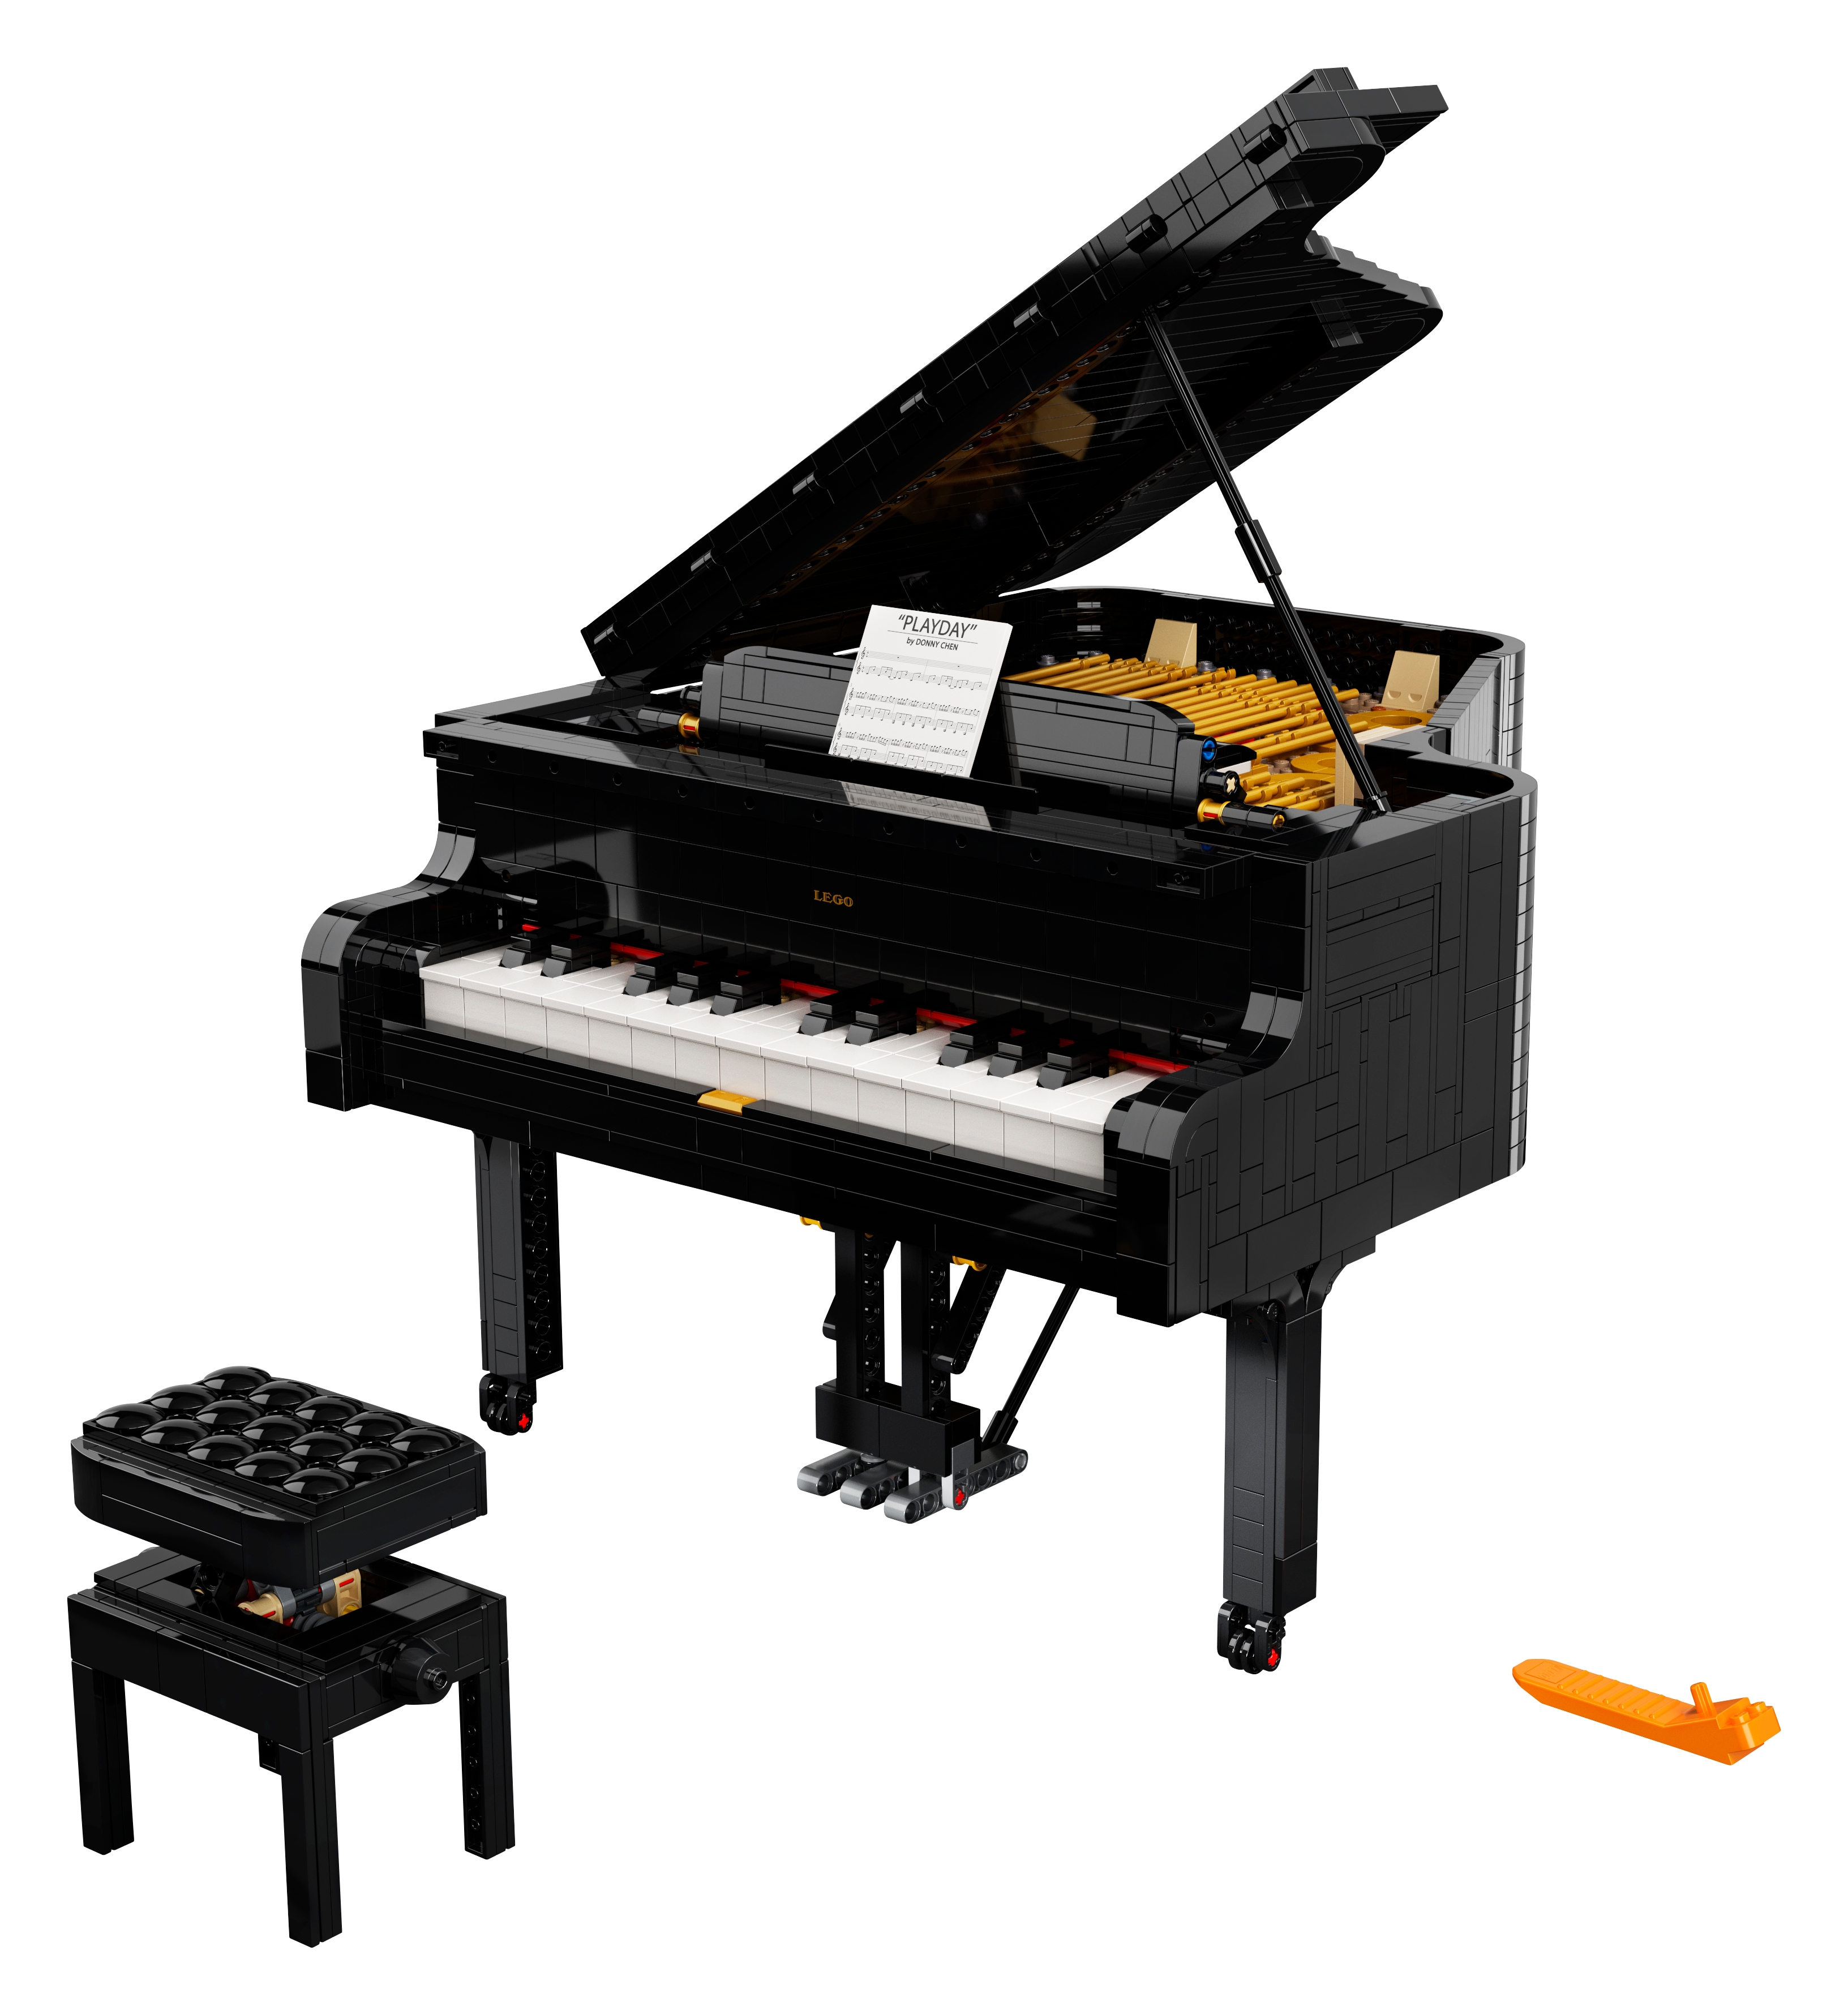 Lego Piano NEW!!! 